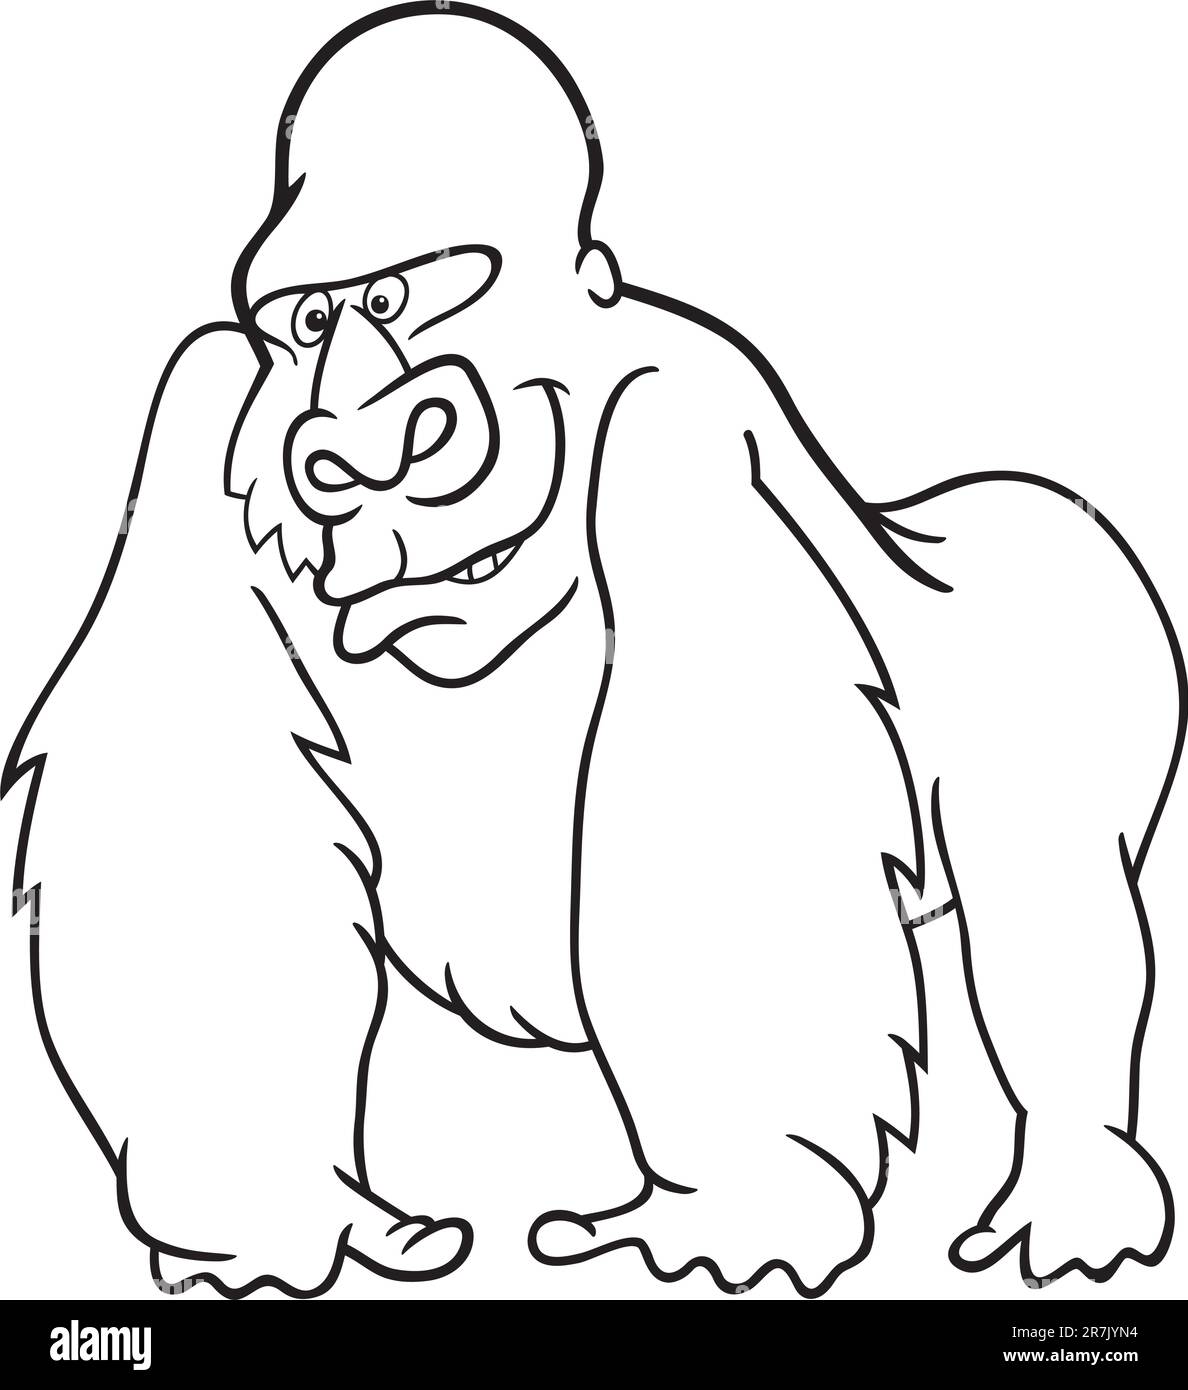 cartoon illustration of silver gorilla for coloring book Stock Vector